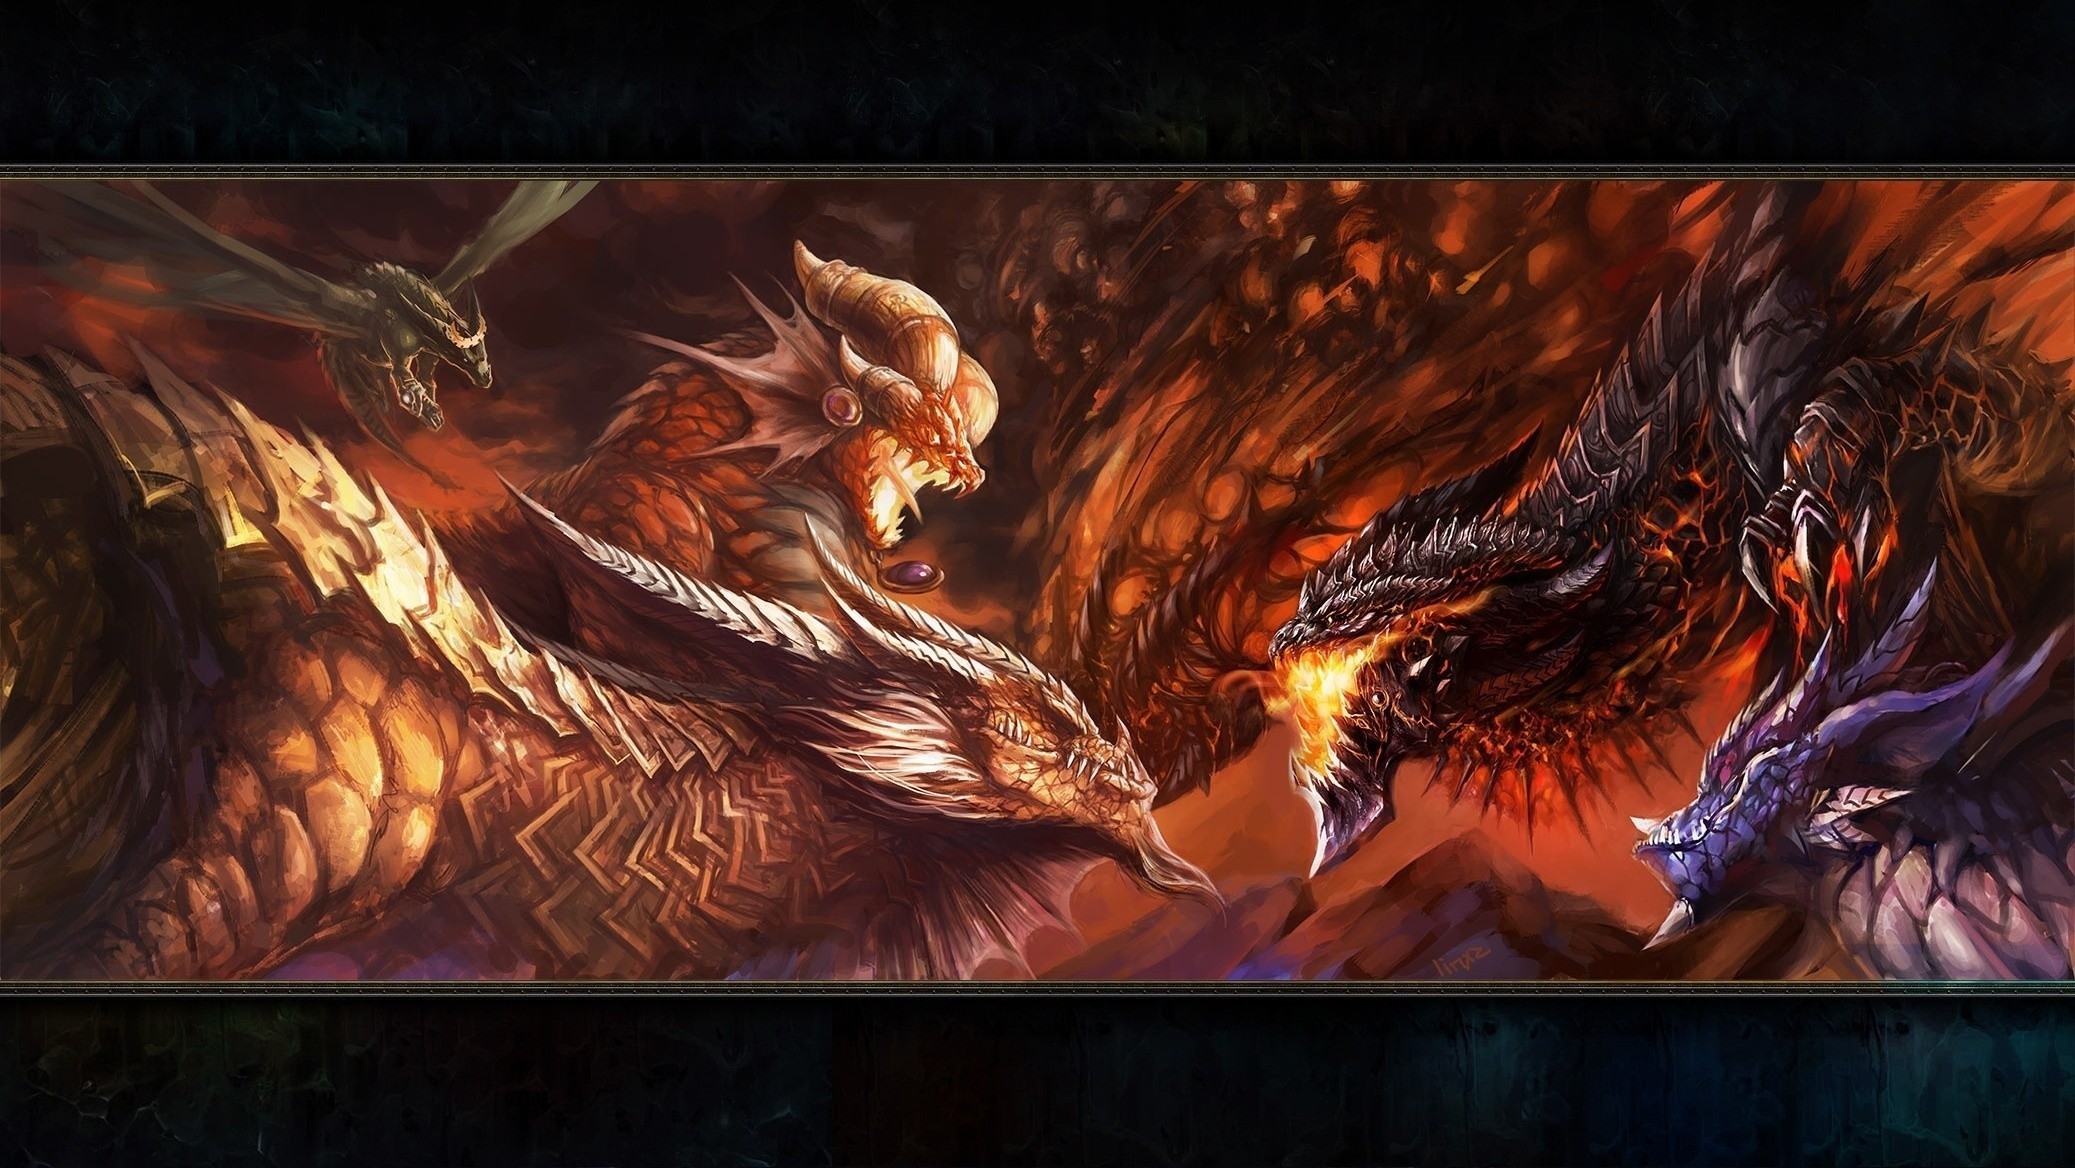 2075x1168 World of warcraft artwork deathwing dragons fantasy art wallpaper